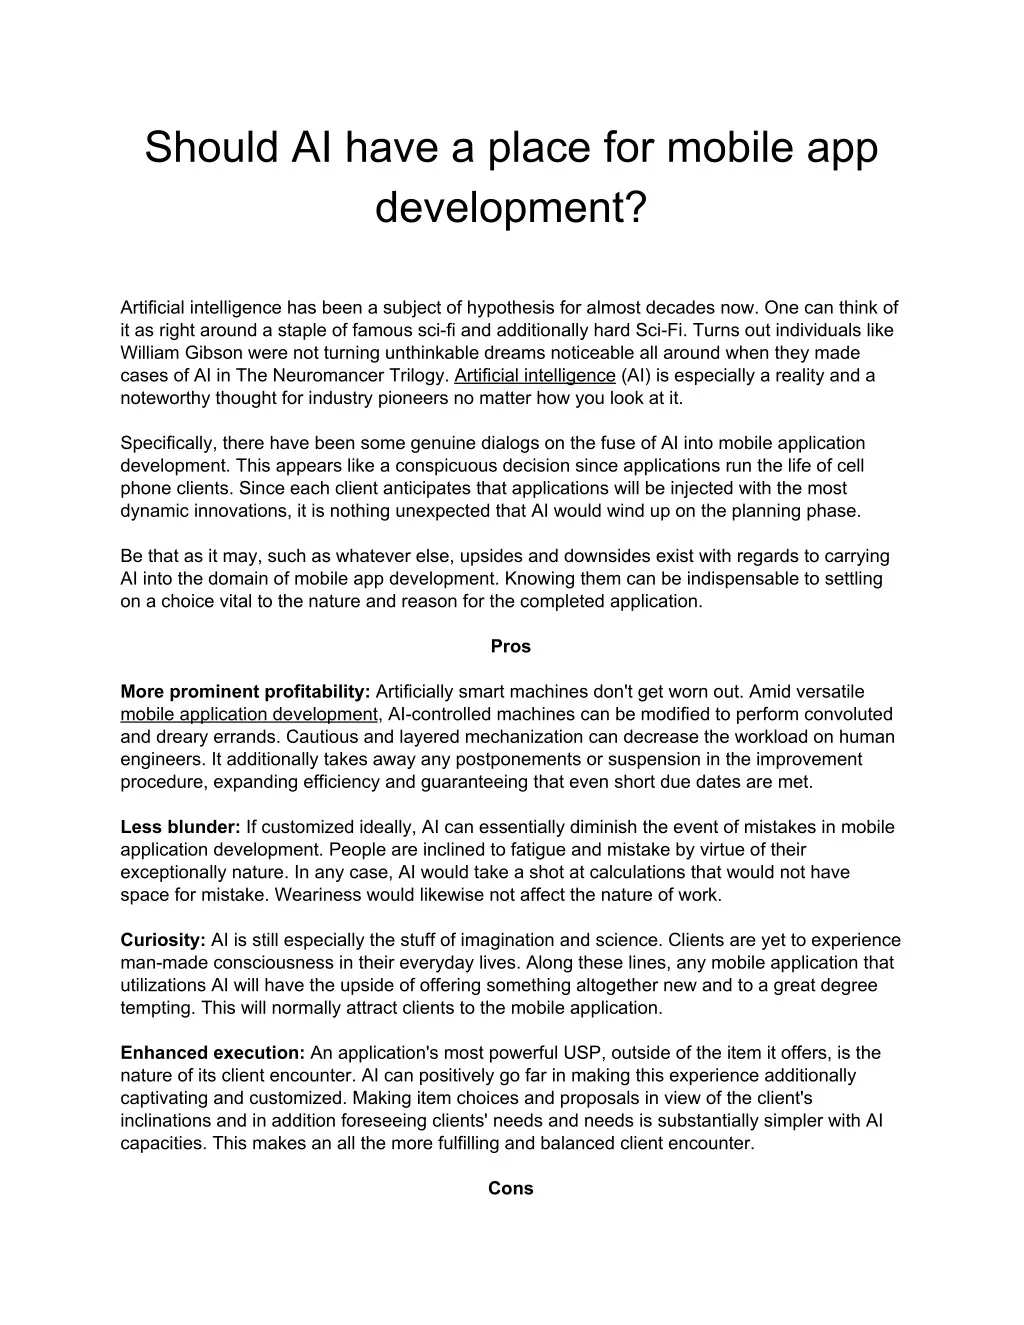 should ai have a place for mobile app development